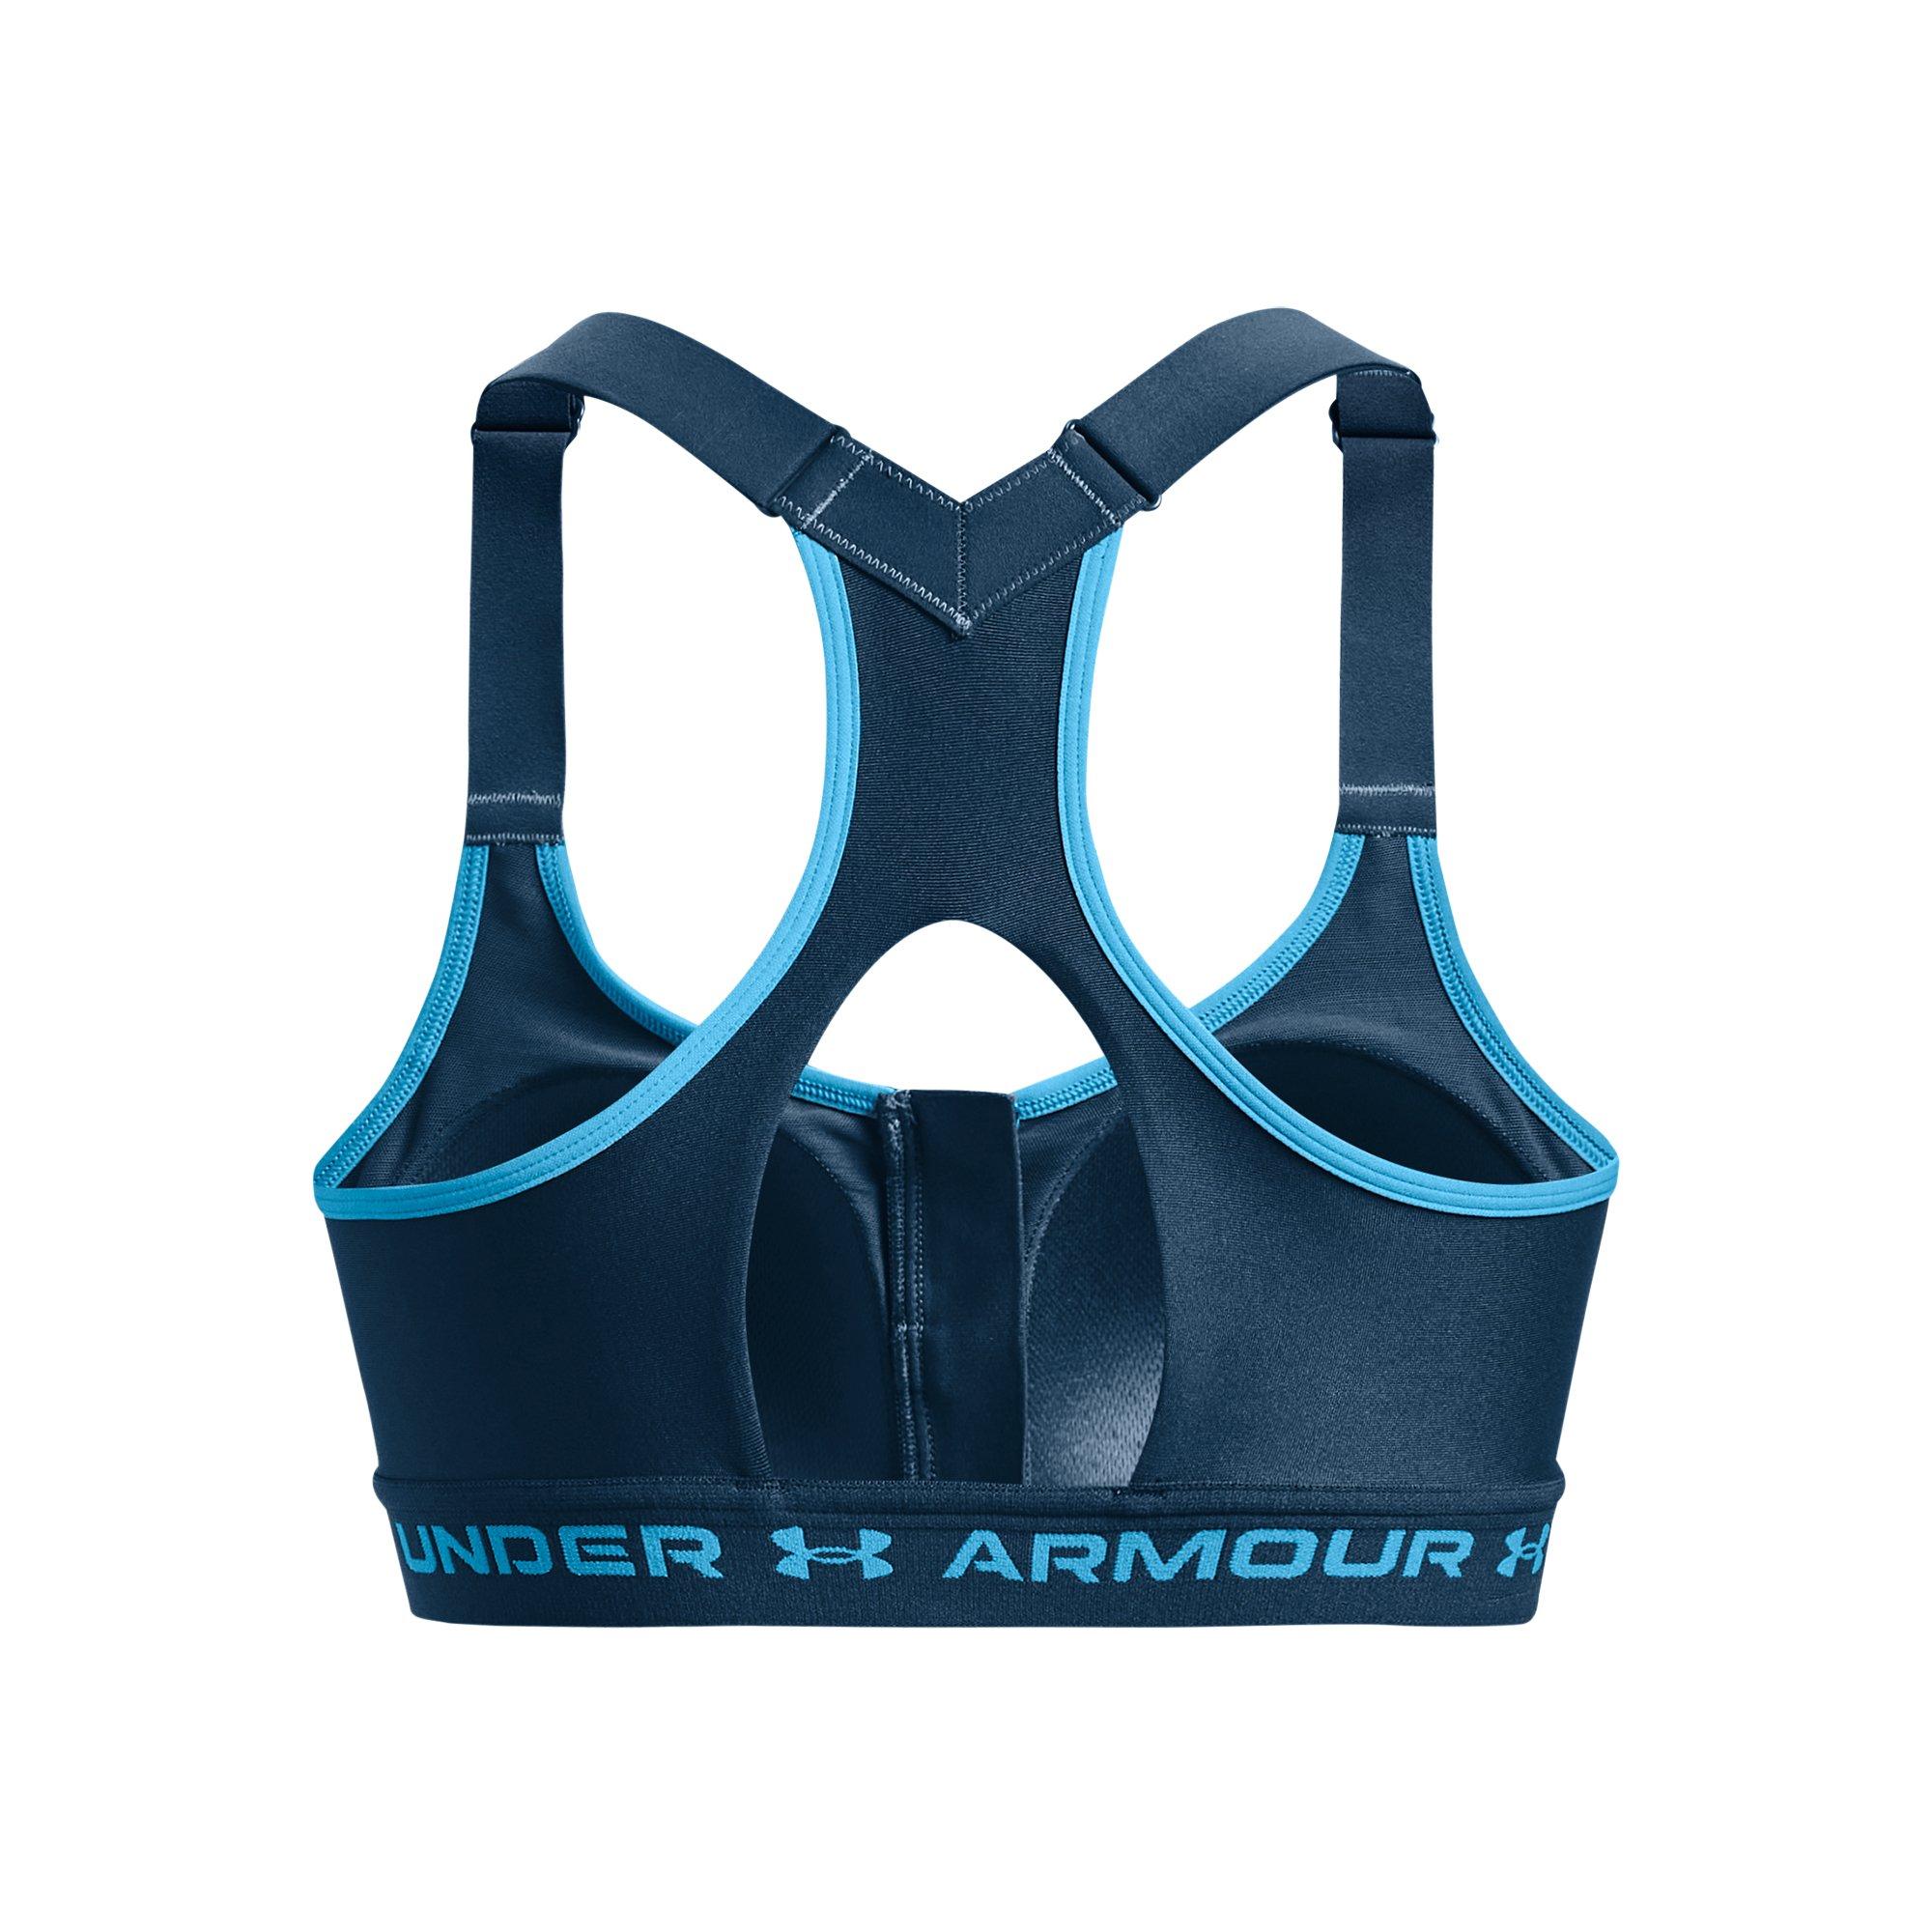 Under Armour Women's High-Impact Sports Bra, size 32C NWT